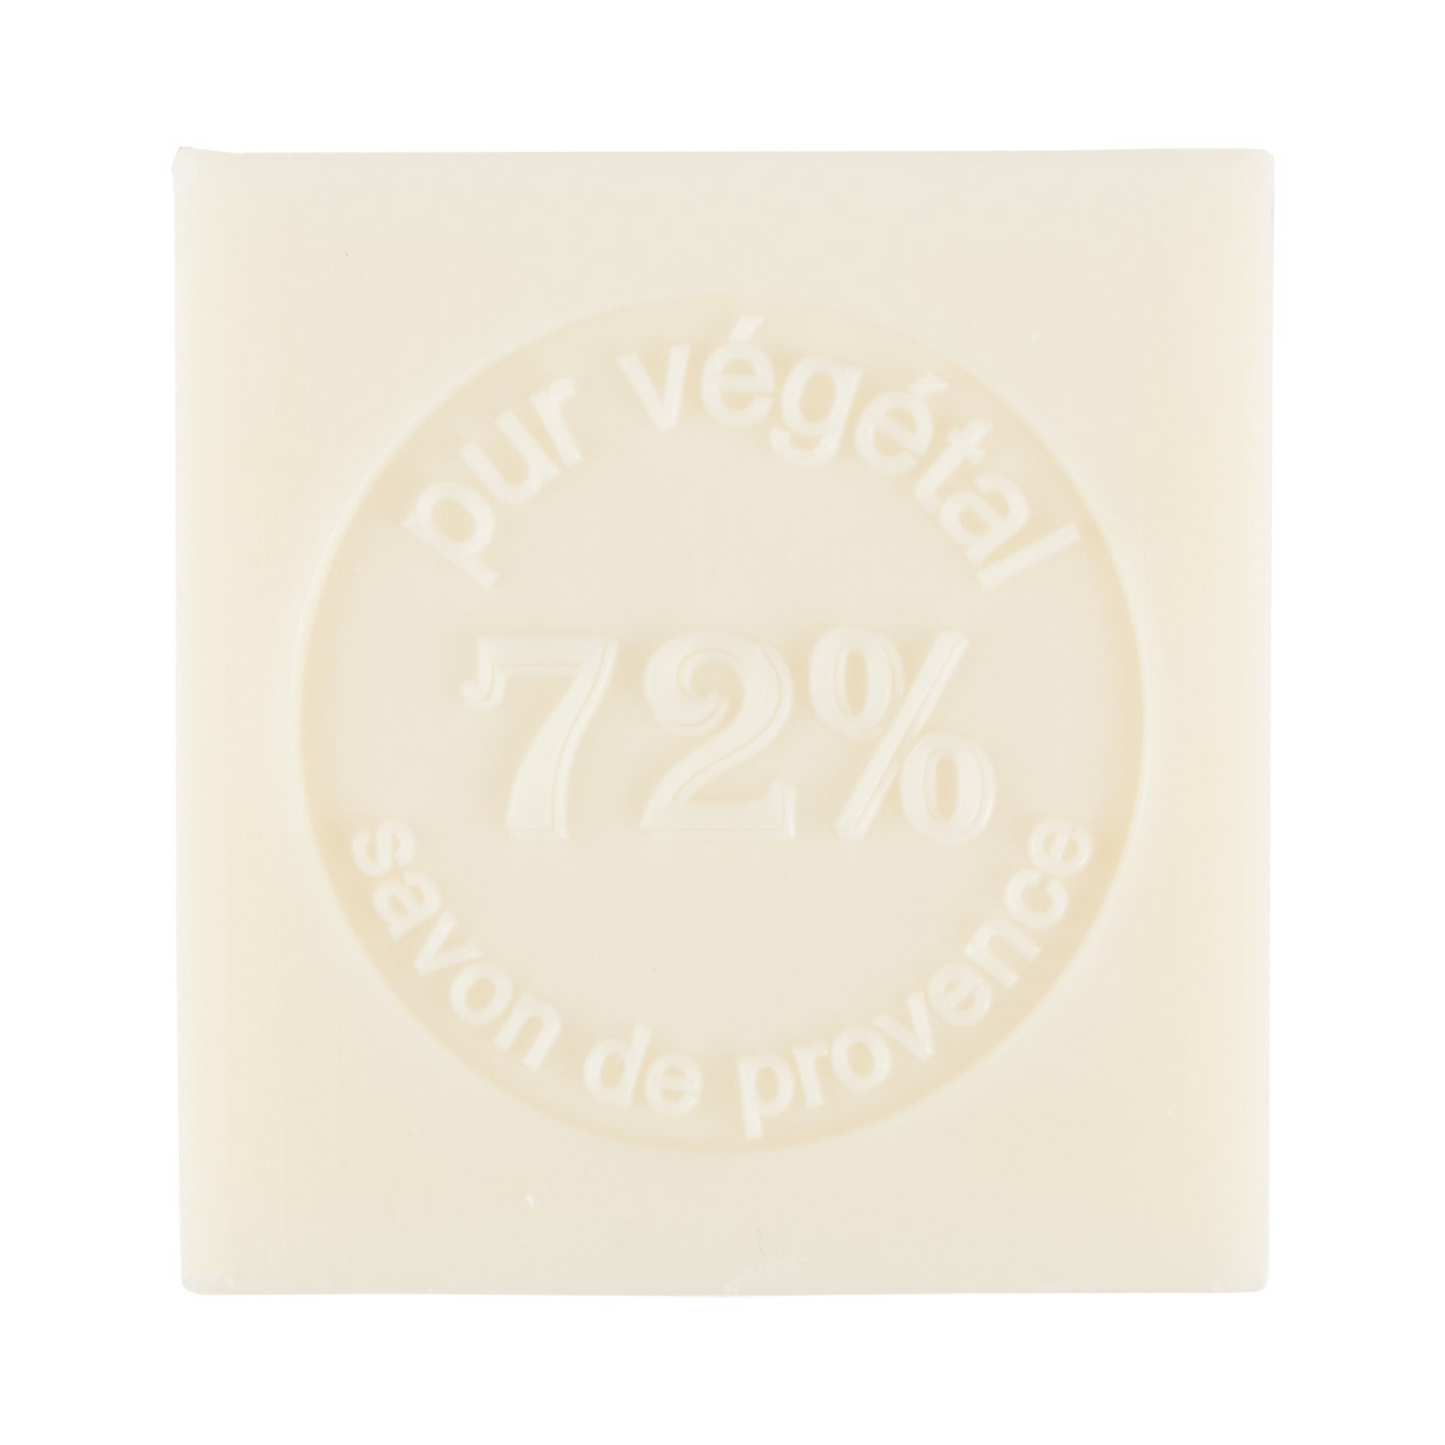 Pre de Provence 72% Marseille Soap Cube (350 g) #10084661